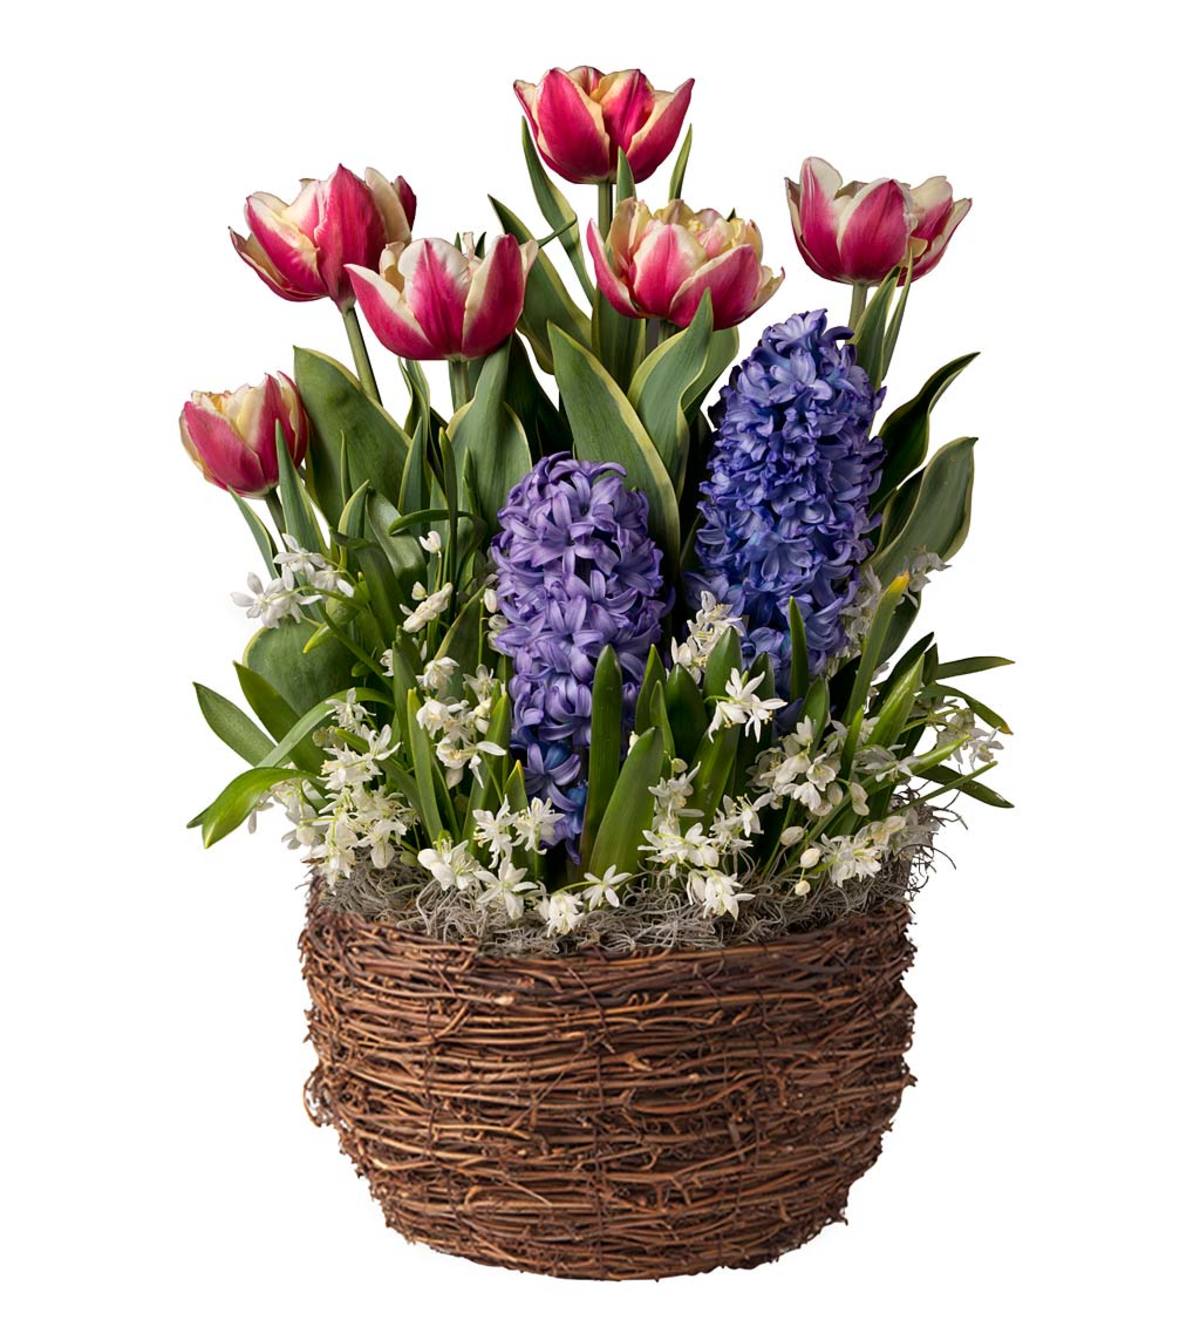 Tulip, Hyacinth and Star of Bethlehem Bulb Garden - Ships January-June 2019